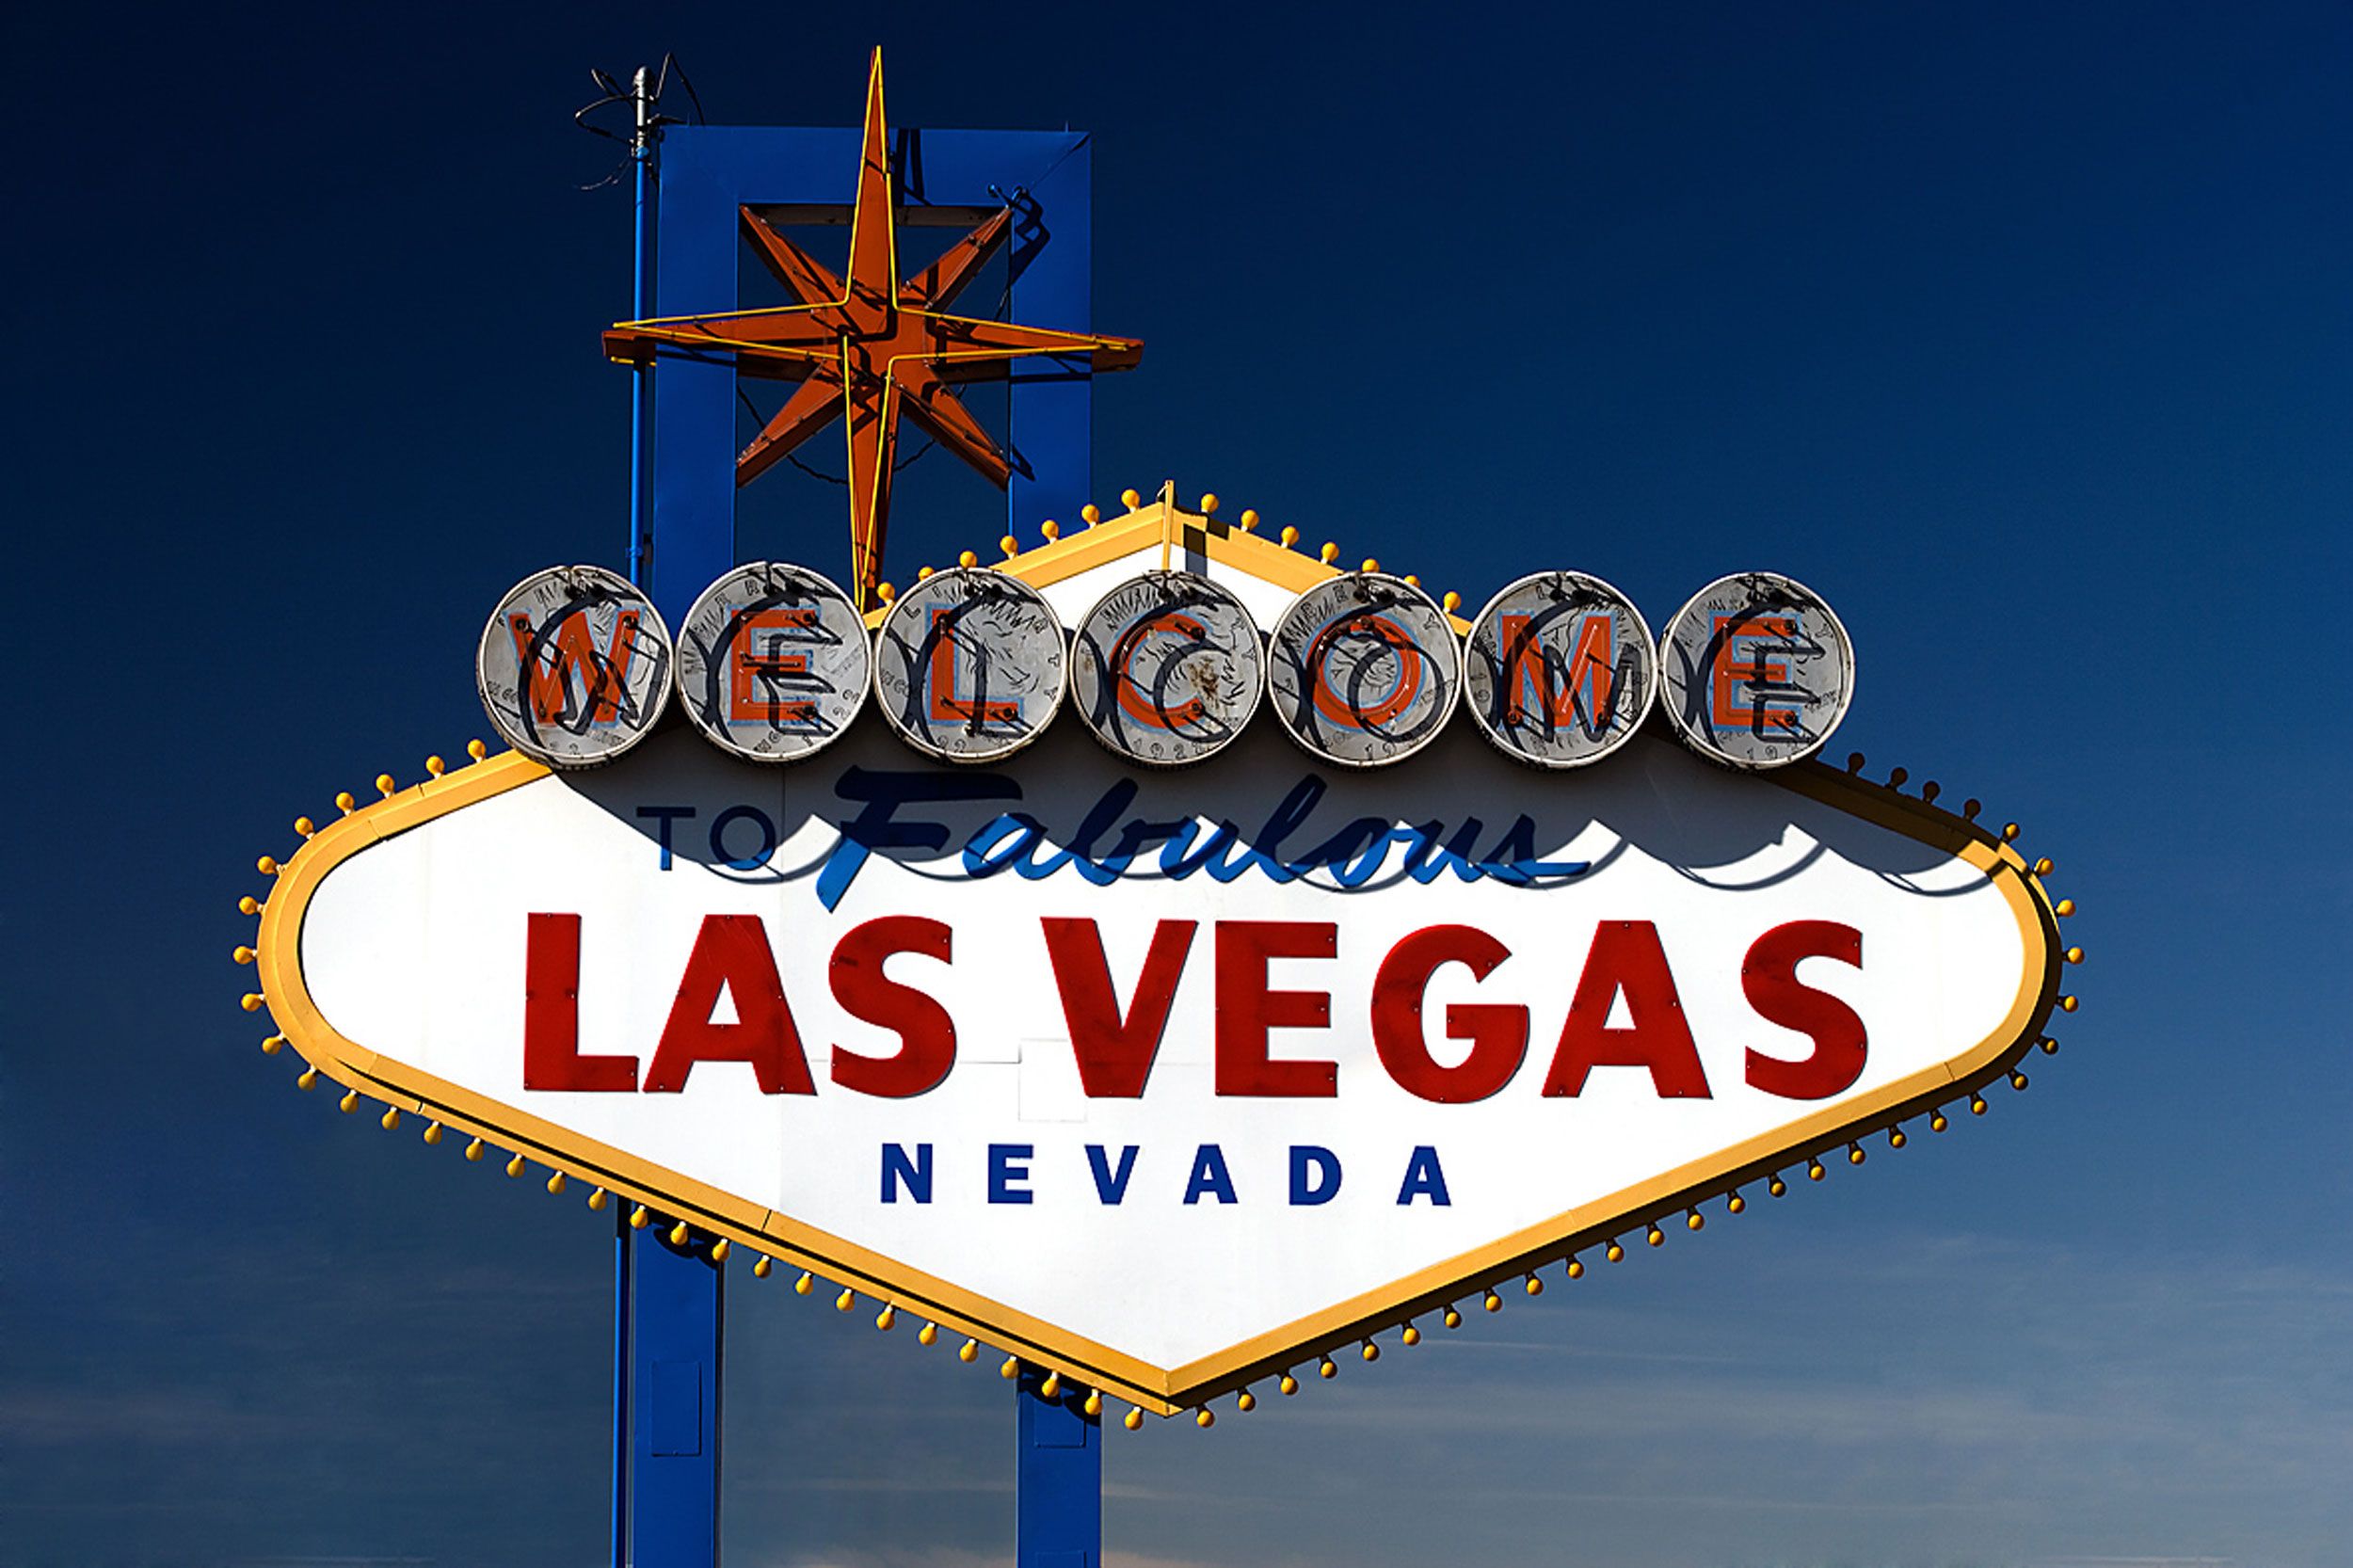 Iconic Las Vegas Sign | Las Vegas, Nevada | Pinterest | Las vegas ...